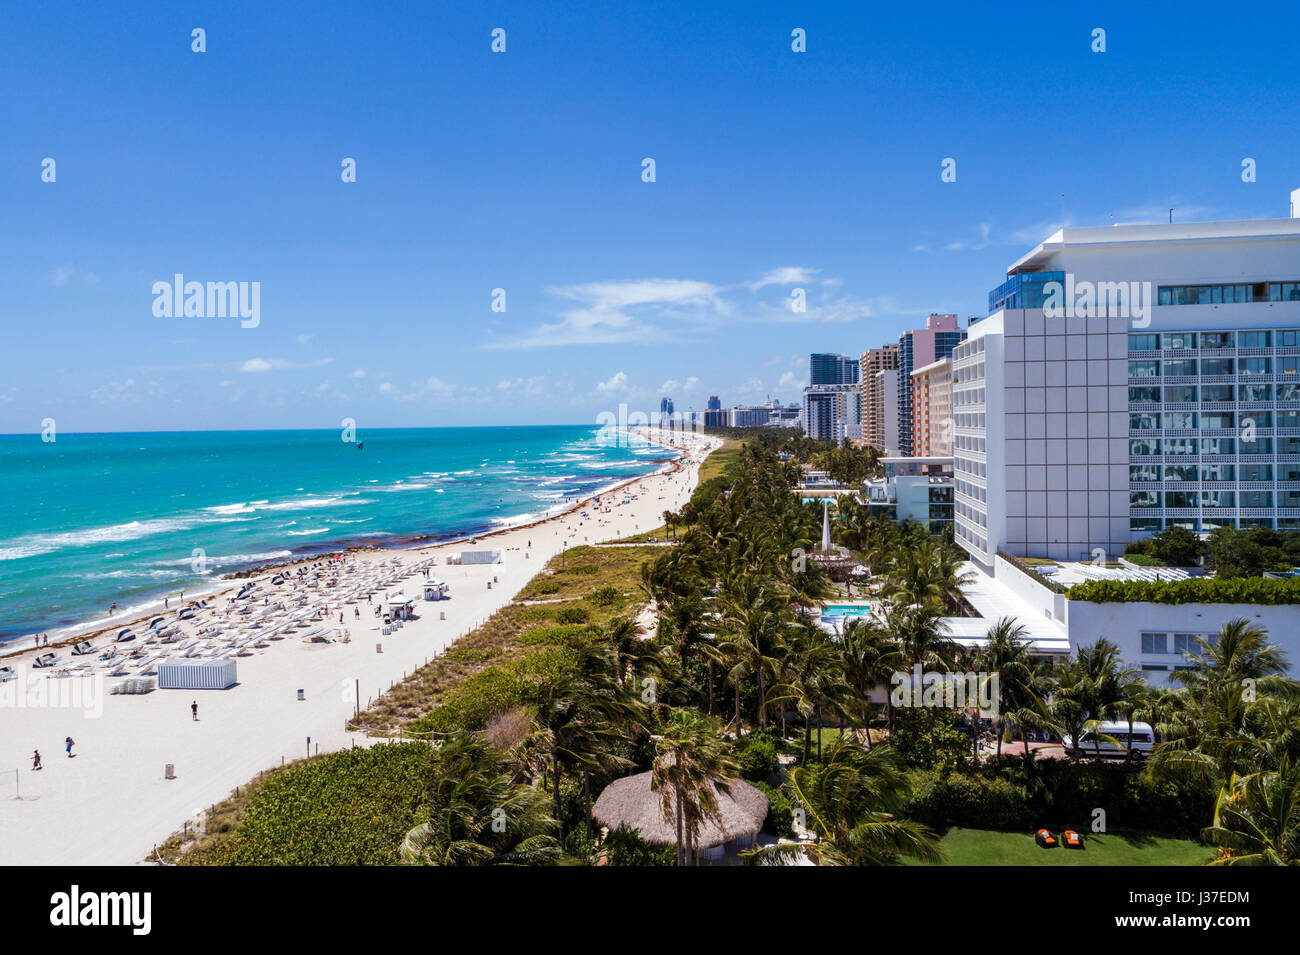 Miami Beach Florida,sand,Atlantic Ocean,surf,aerial overhead view,Edition Seville,hotel,hotels,condominium buildings,FL170429d12 Stock Photo